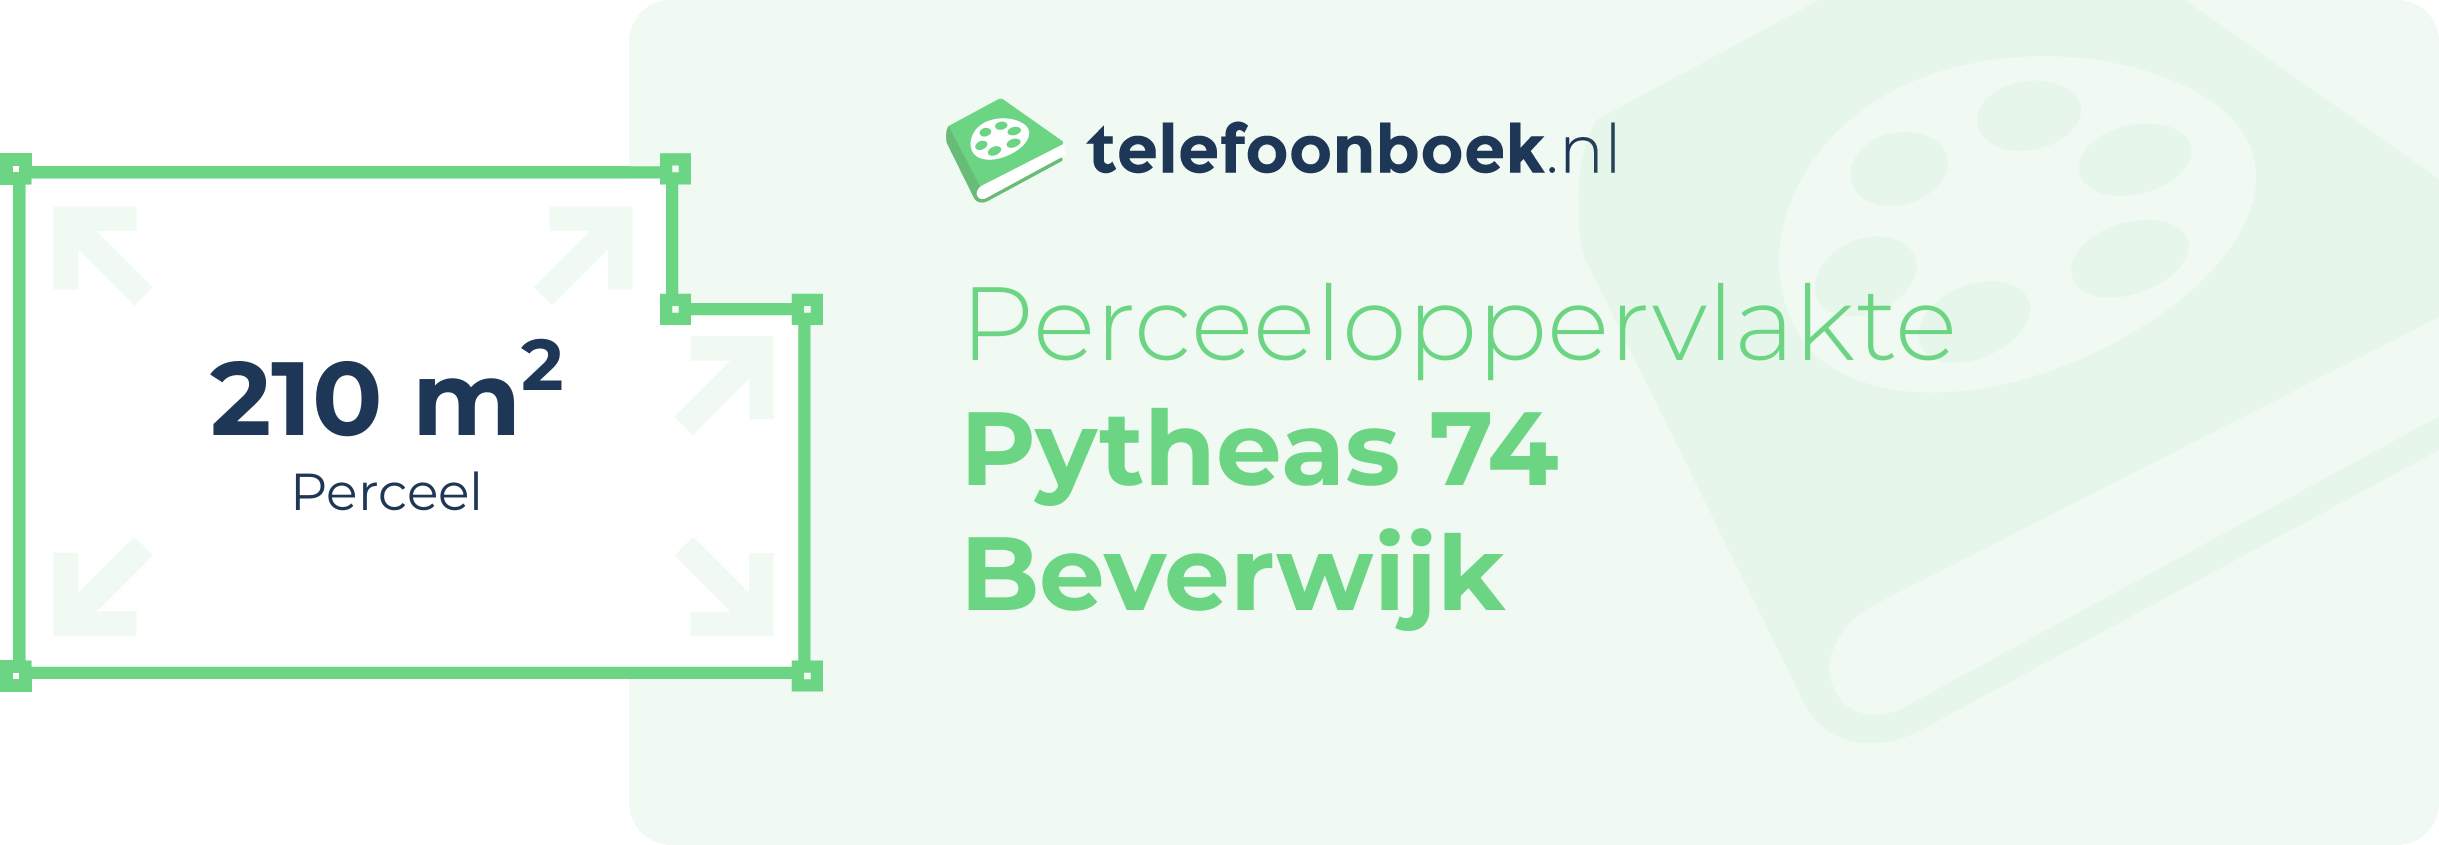 Perceeloppervlakte Pytheas 74 Beverwijk